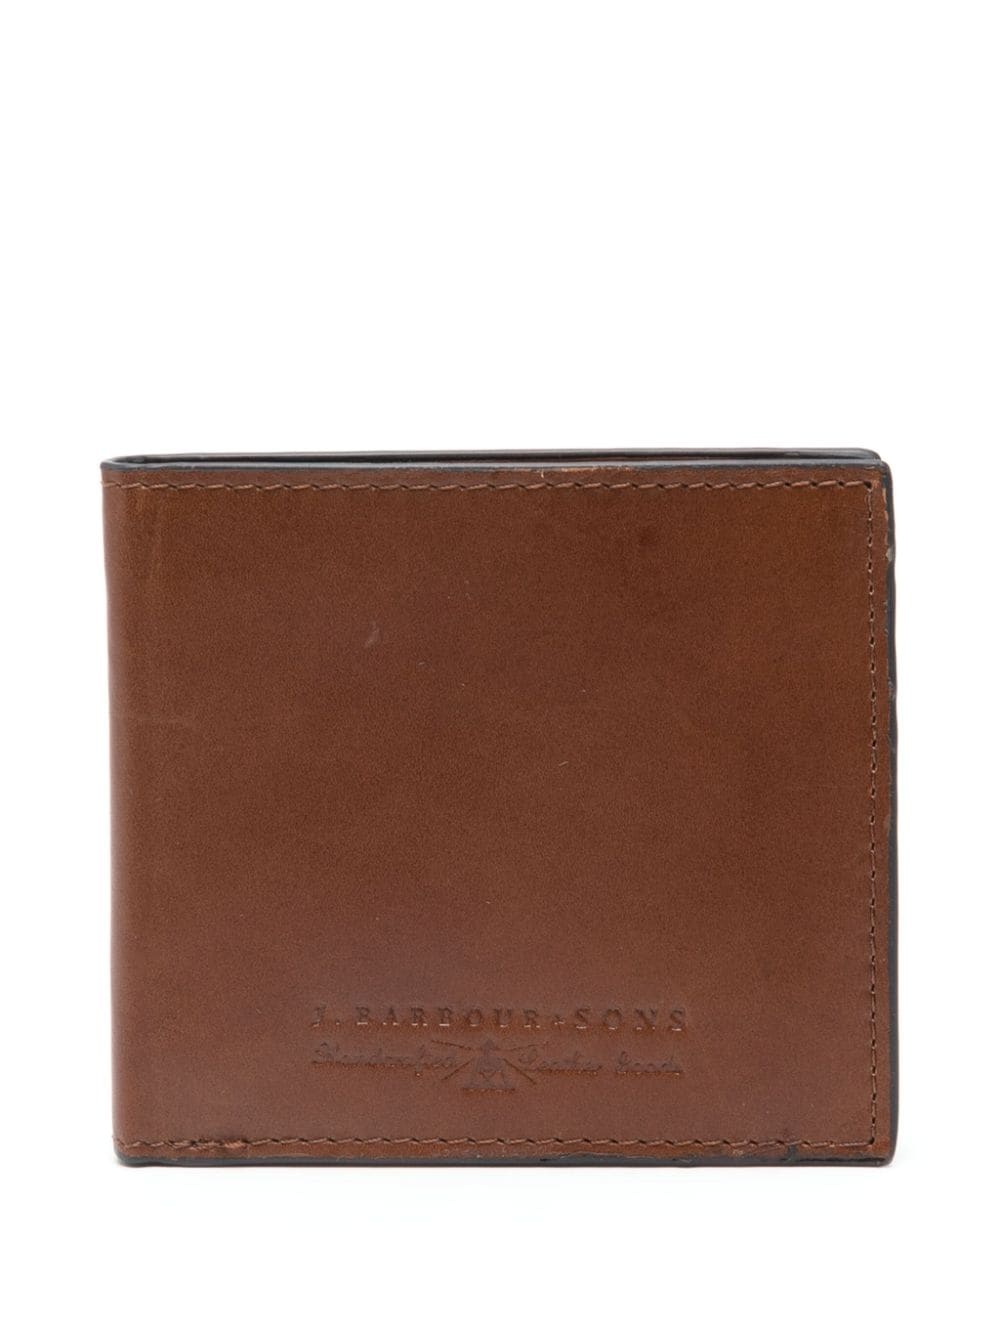 Torridon leather wallet - 1